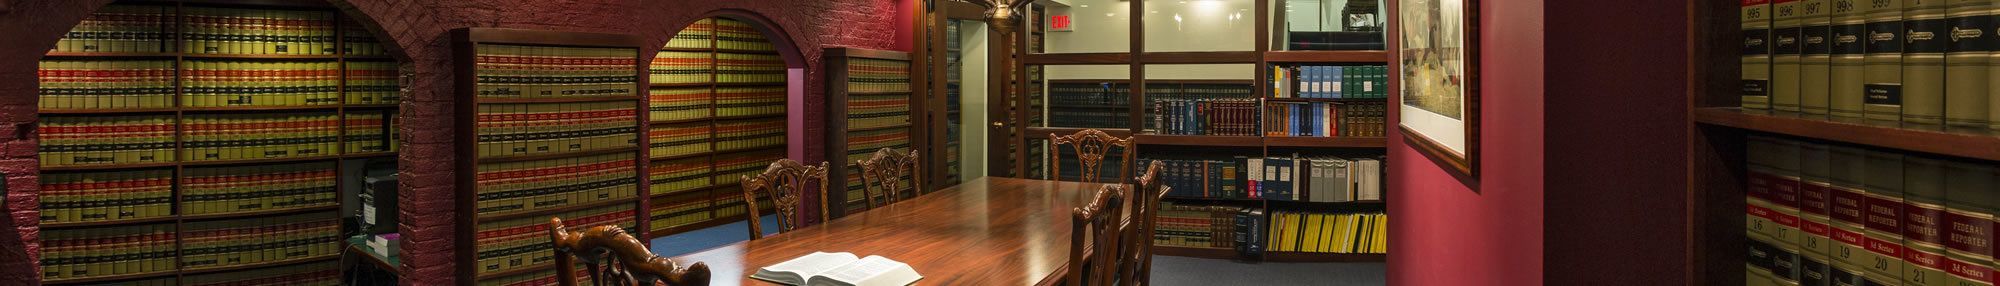 Bochetto & Lentz Law Library